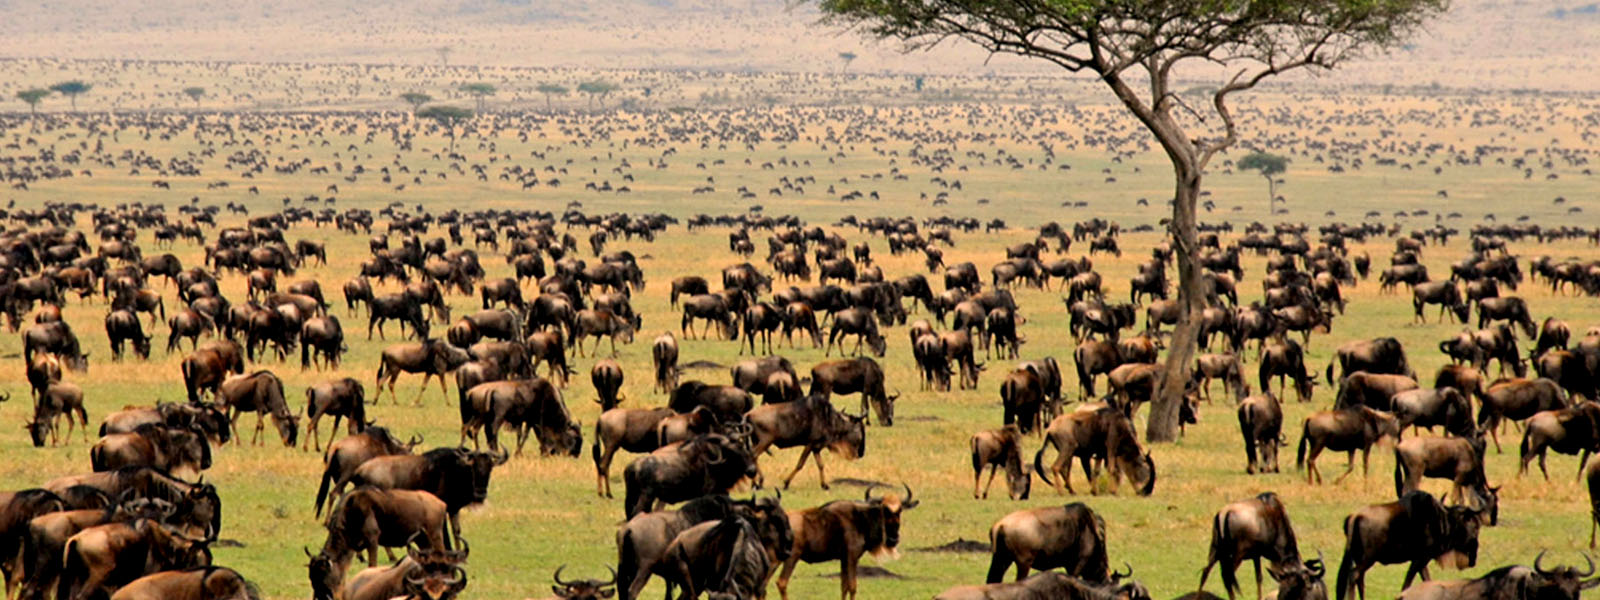 Serengeti Migration safaris - Tukutane Porini Safaris